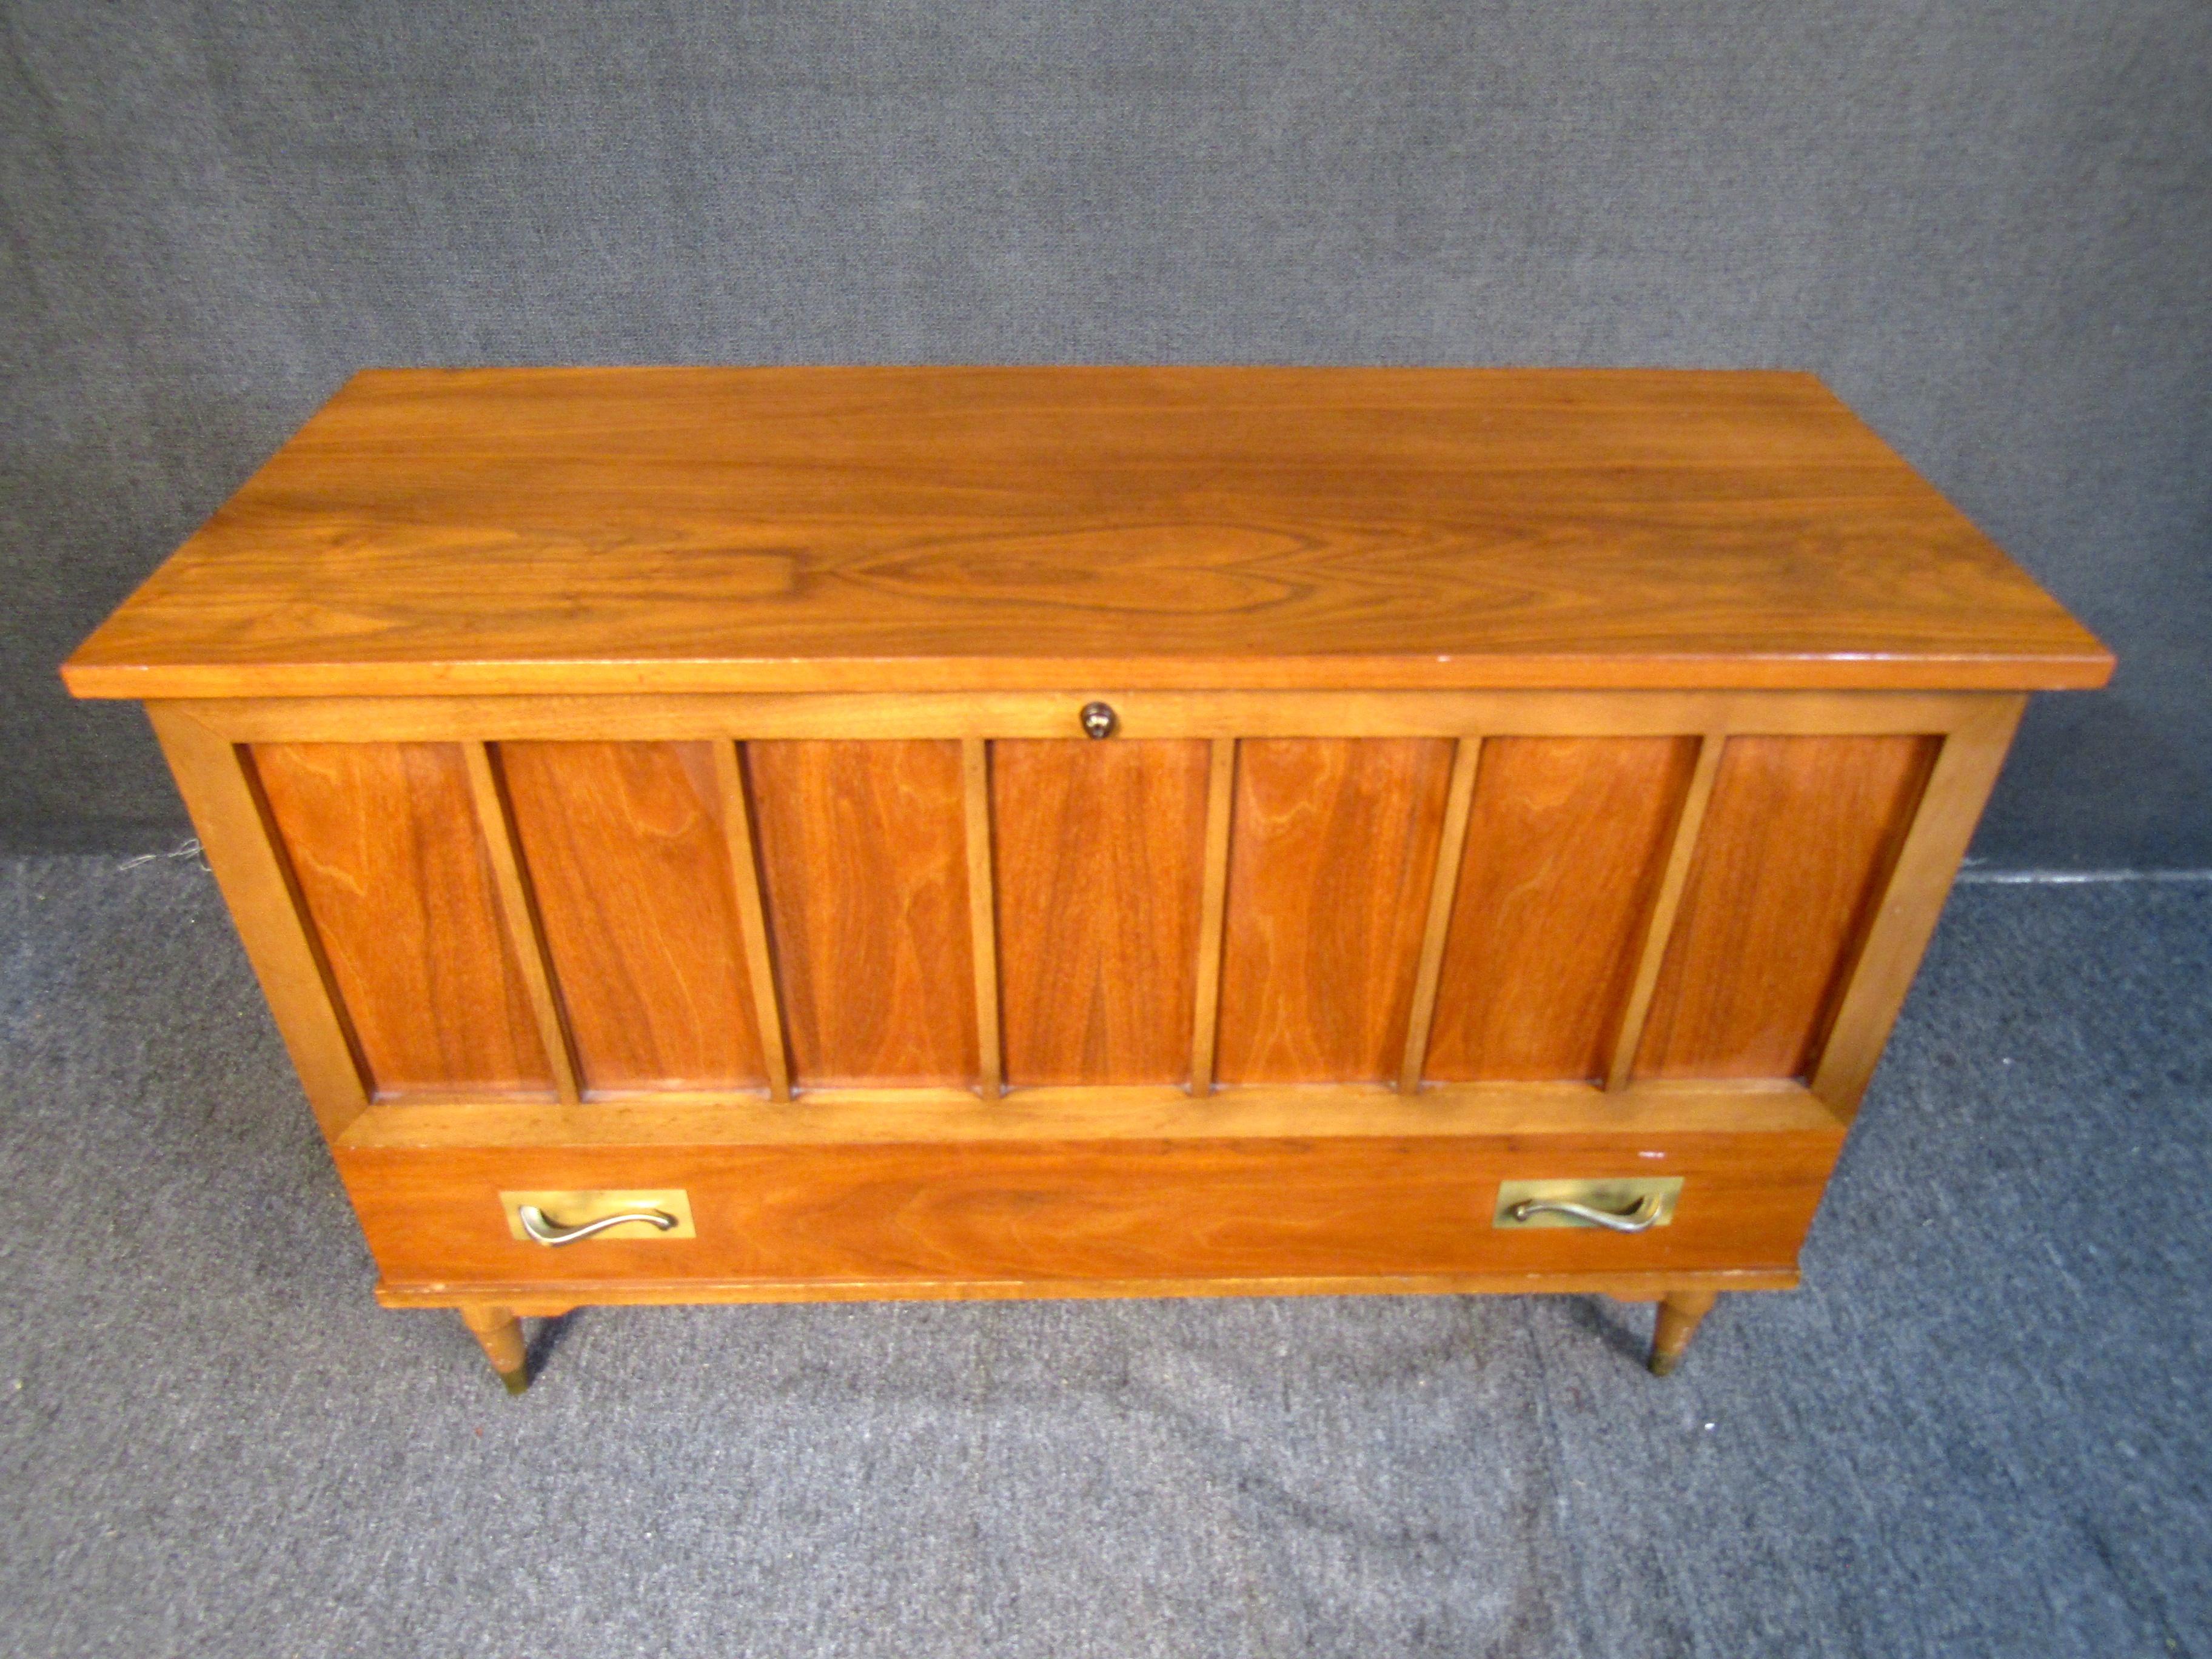 Vintage modern cedar chest by Lane. Sturdy construction, walnut exterior with 